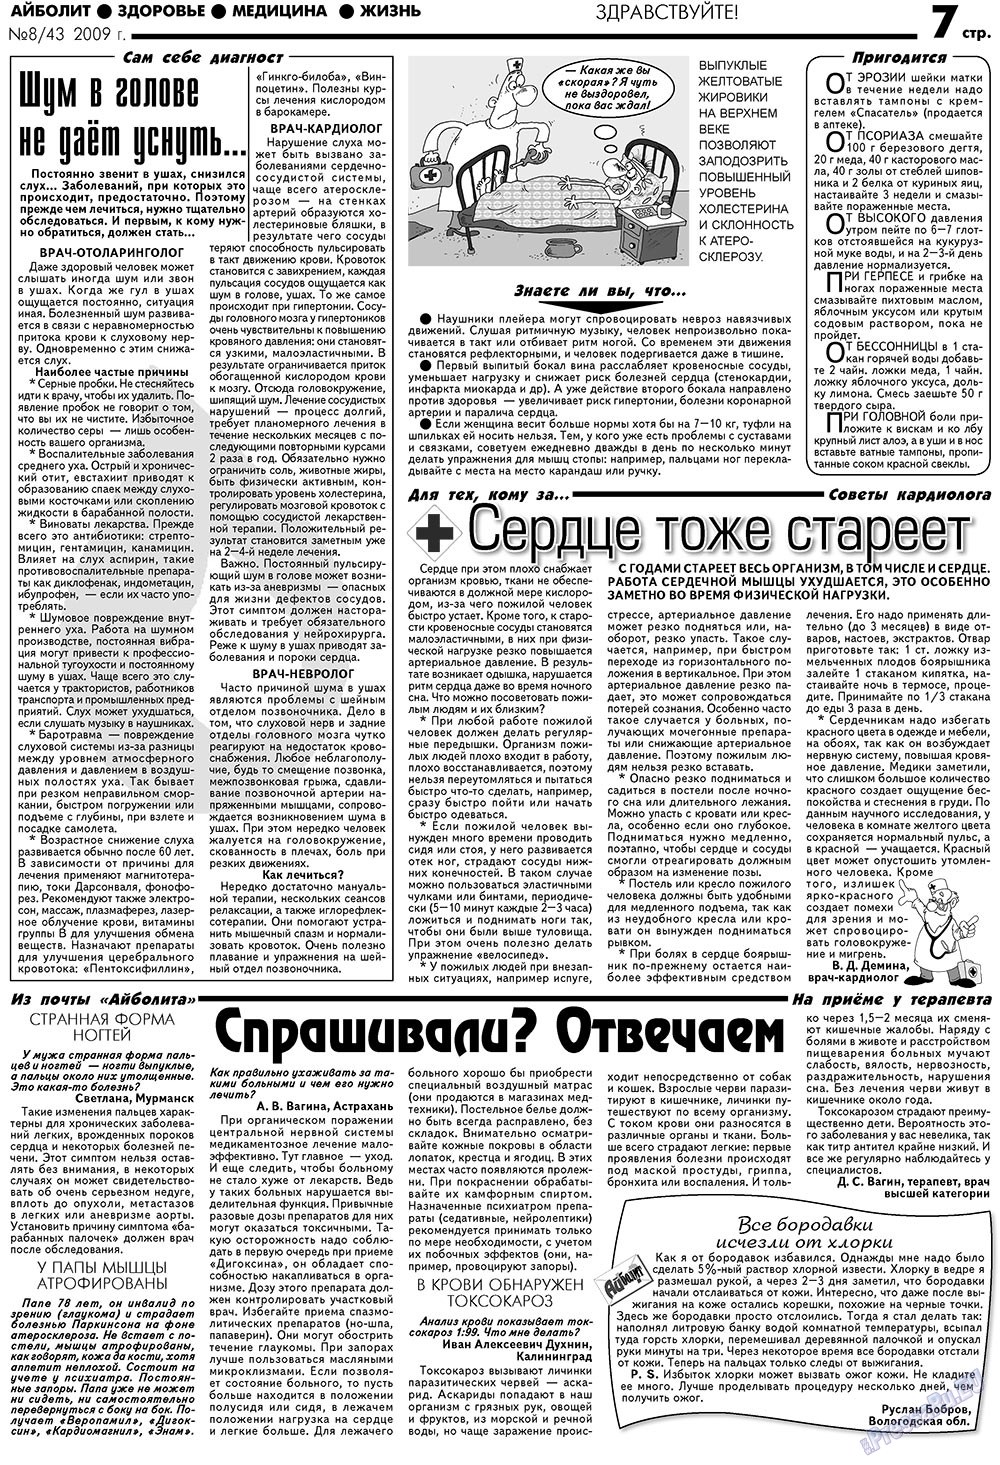 АйБолит (газета). 2009 год, номер 8, стр. 7